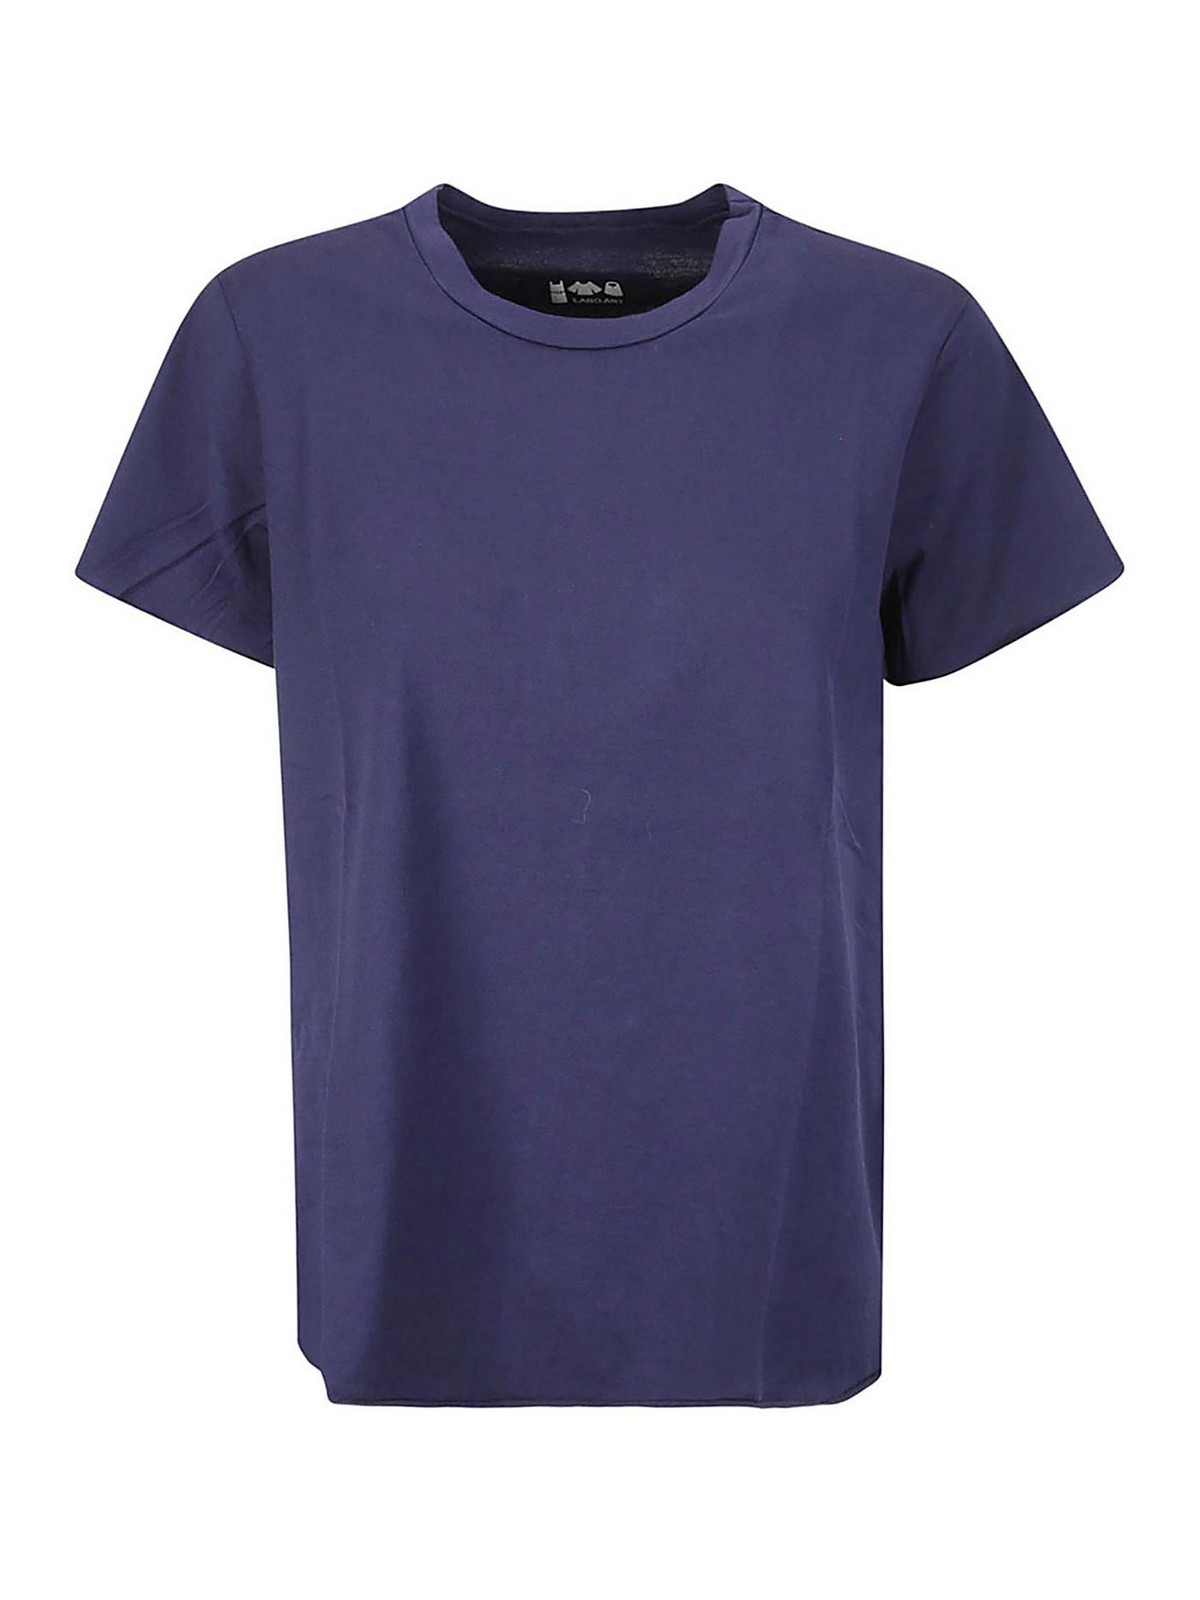 Shop Labo.art Camiseta - Rico In Blue